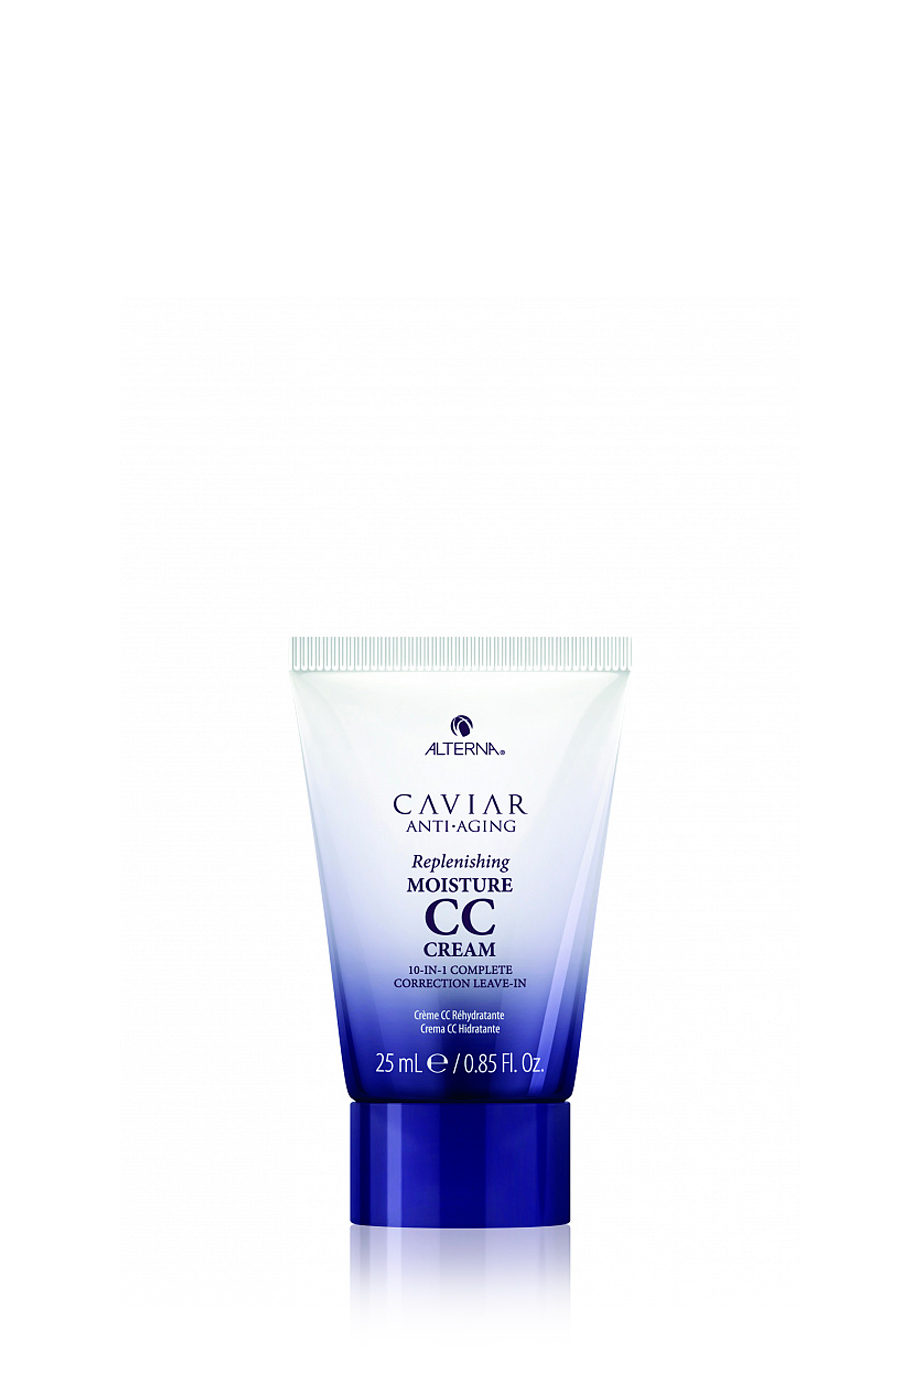 Alterna Caviar Anti-Aging Replenishing Moisture CC Cream 25 ml.